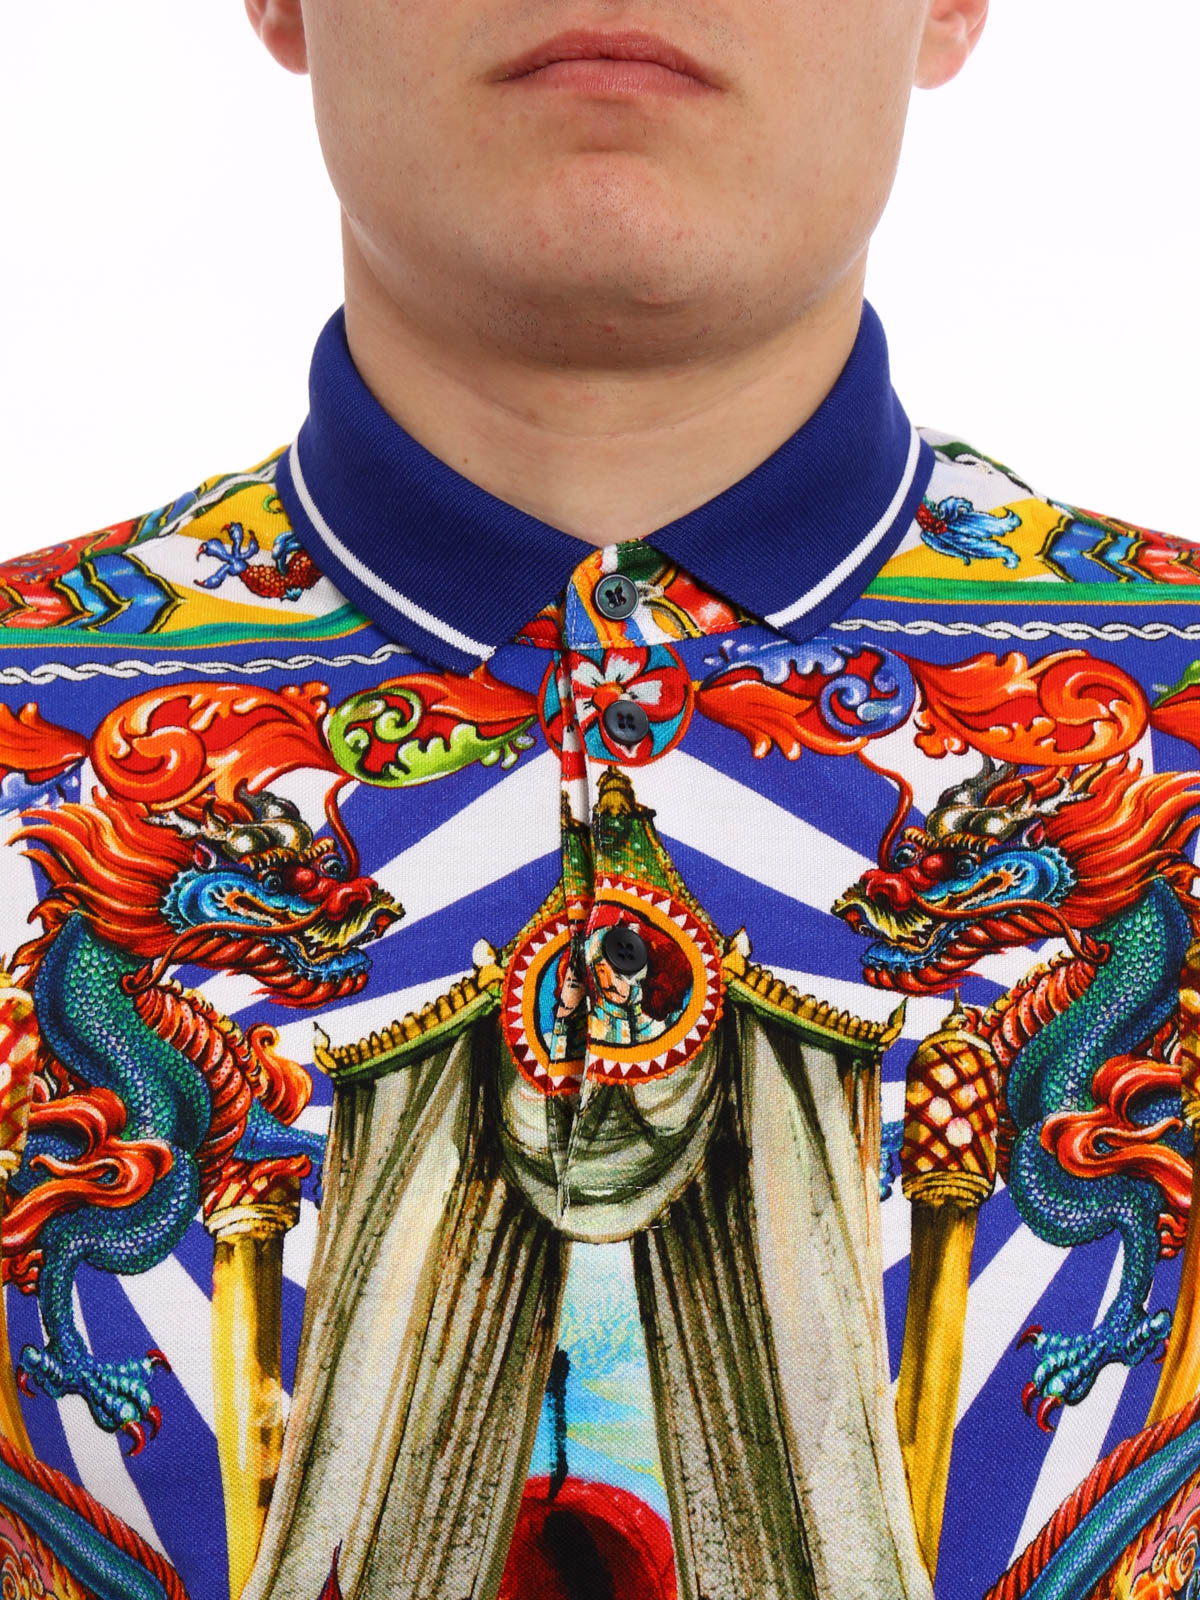 Polo shirts Dolce & Gabbana - Sicilian cart patterned polo shirt -  G8FX3TG7GYDX0860